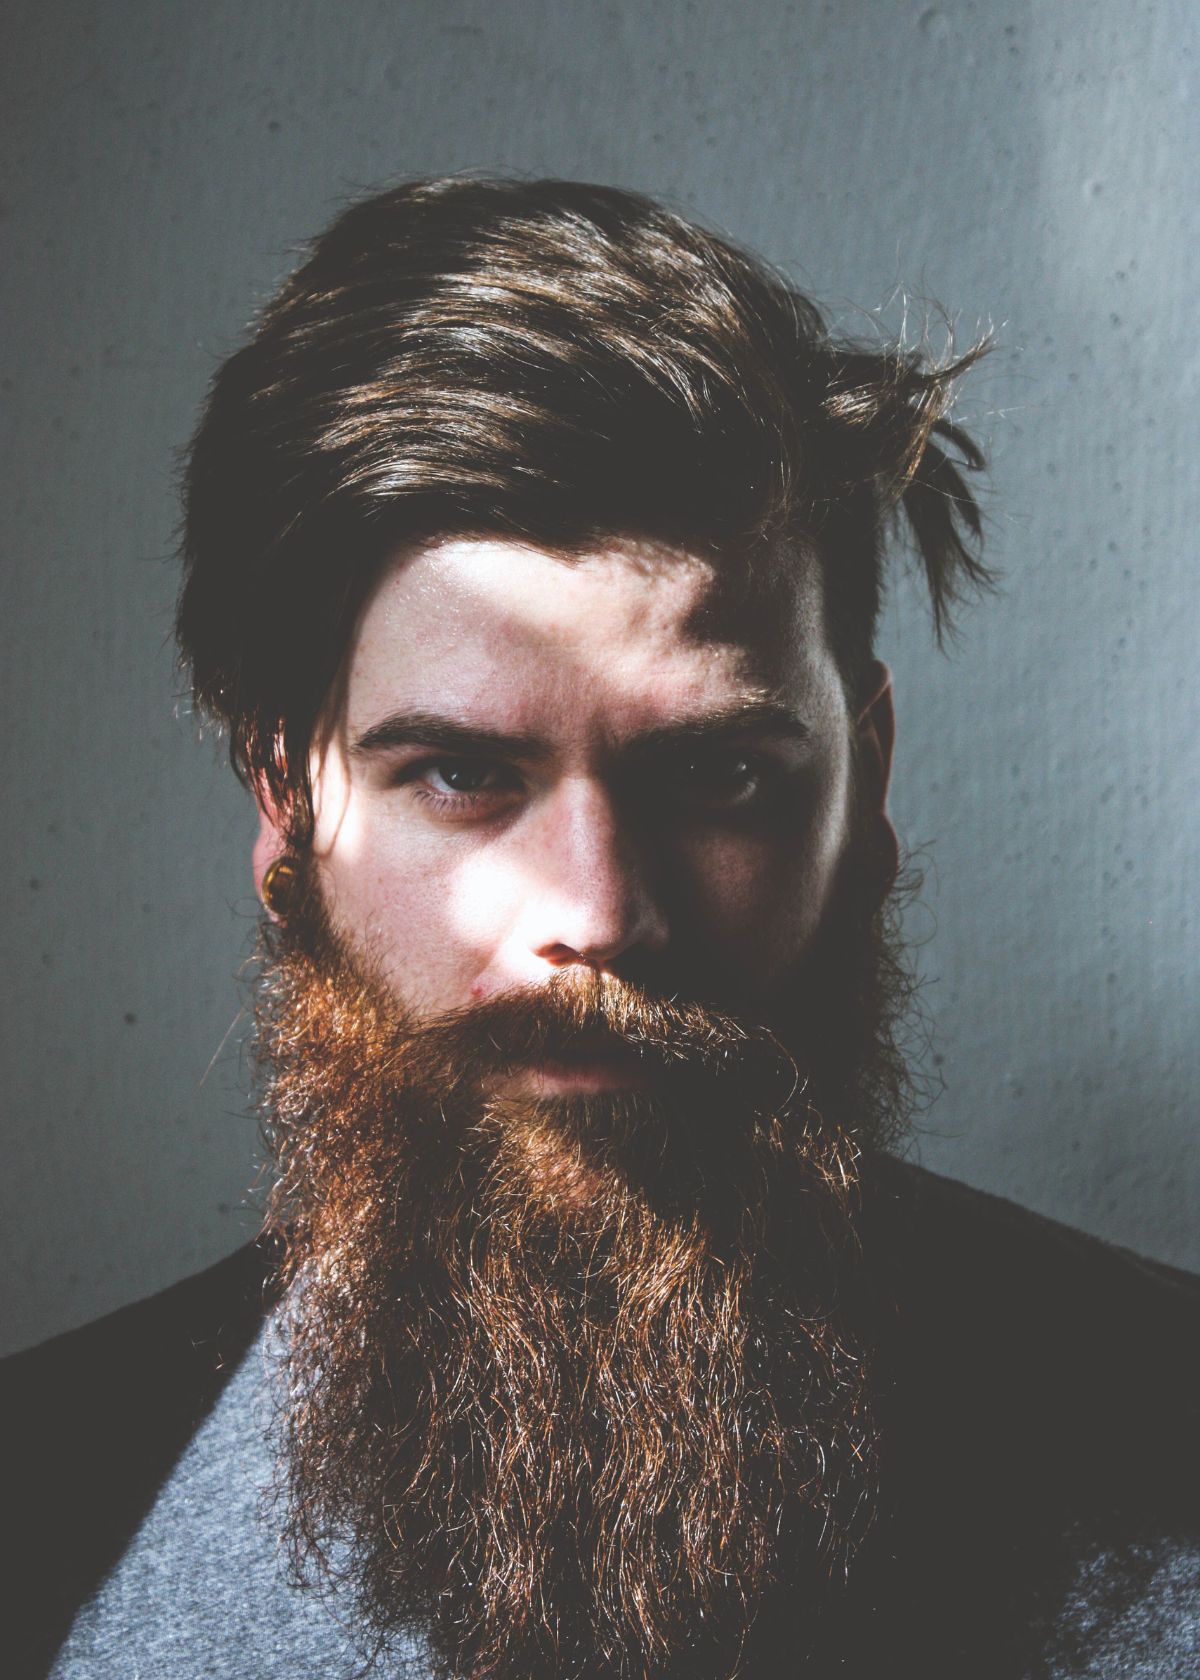 The Best Beard Growth Kit for A Manly Beard